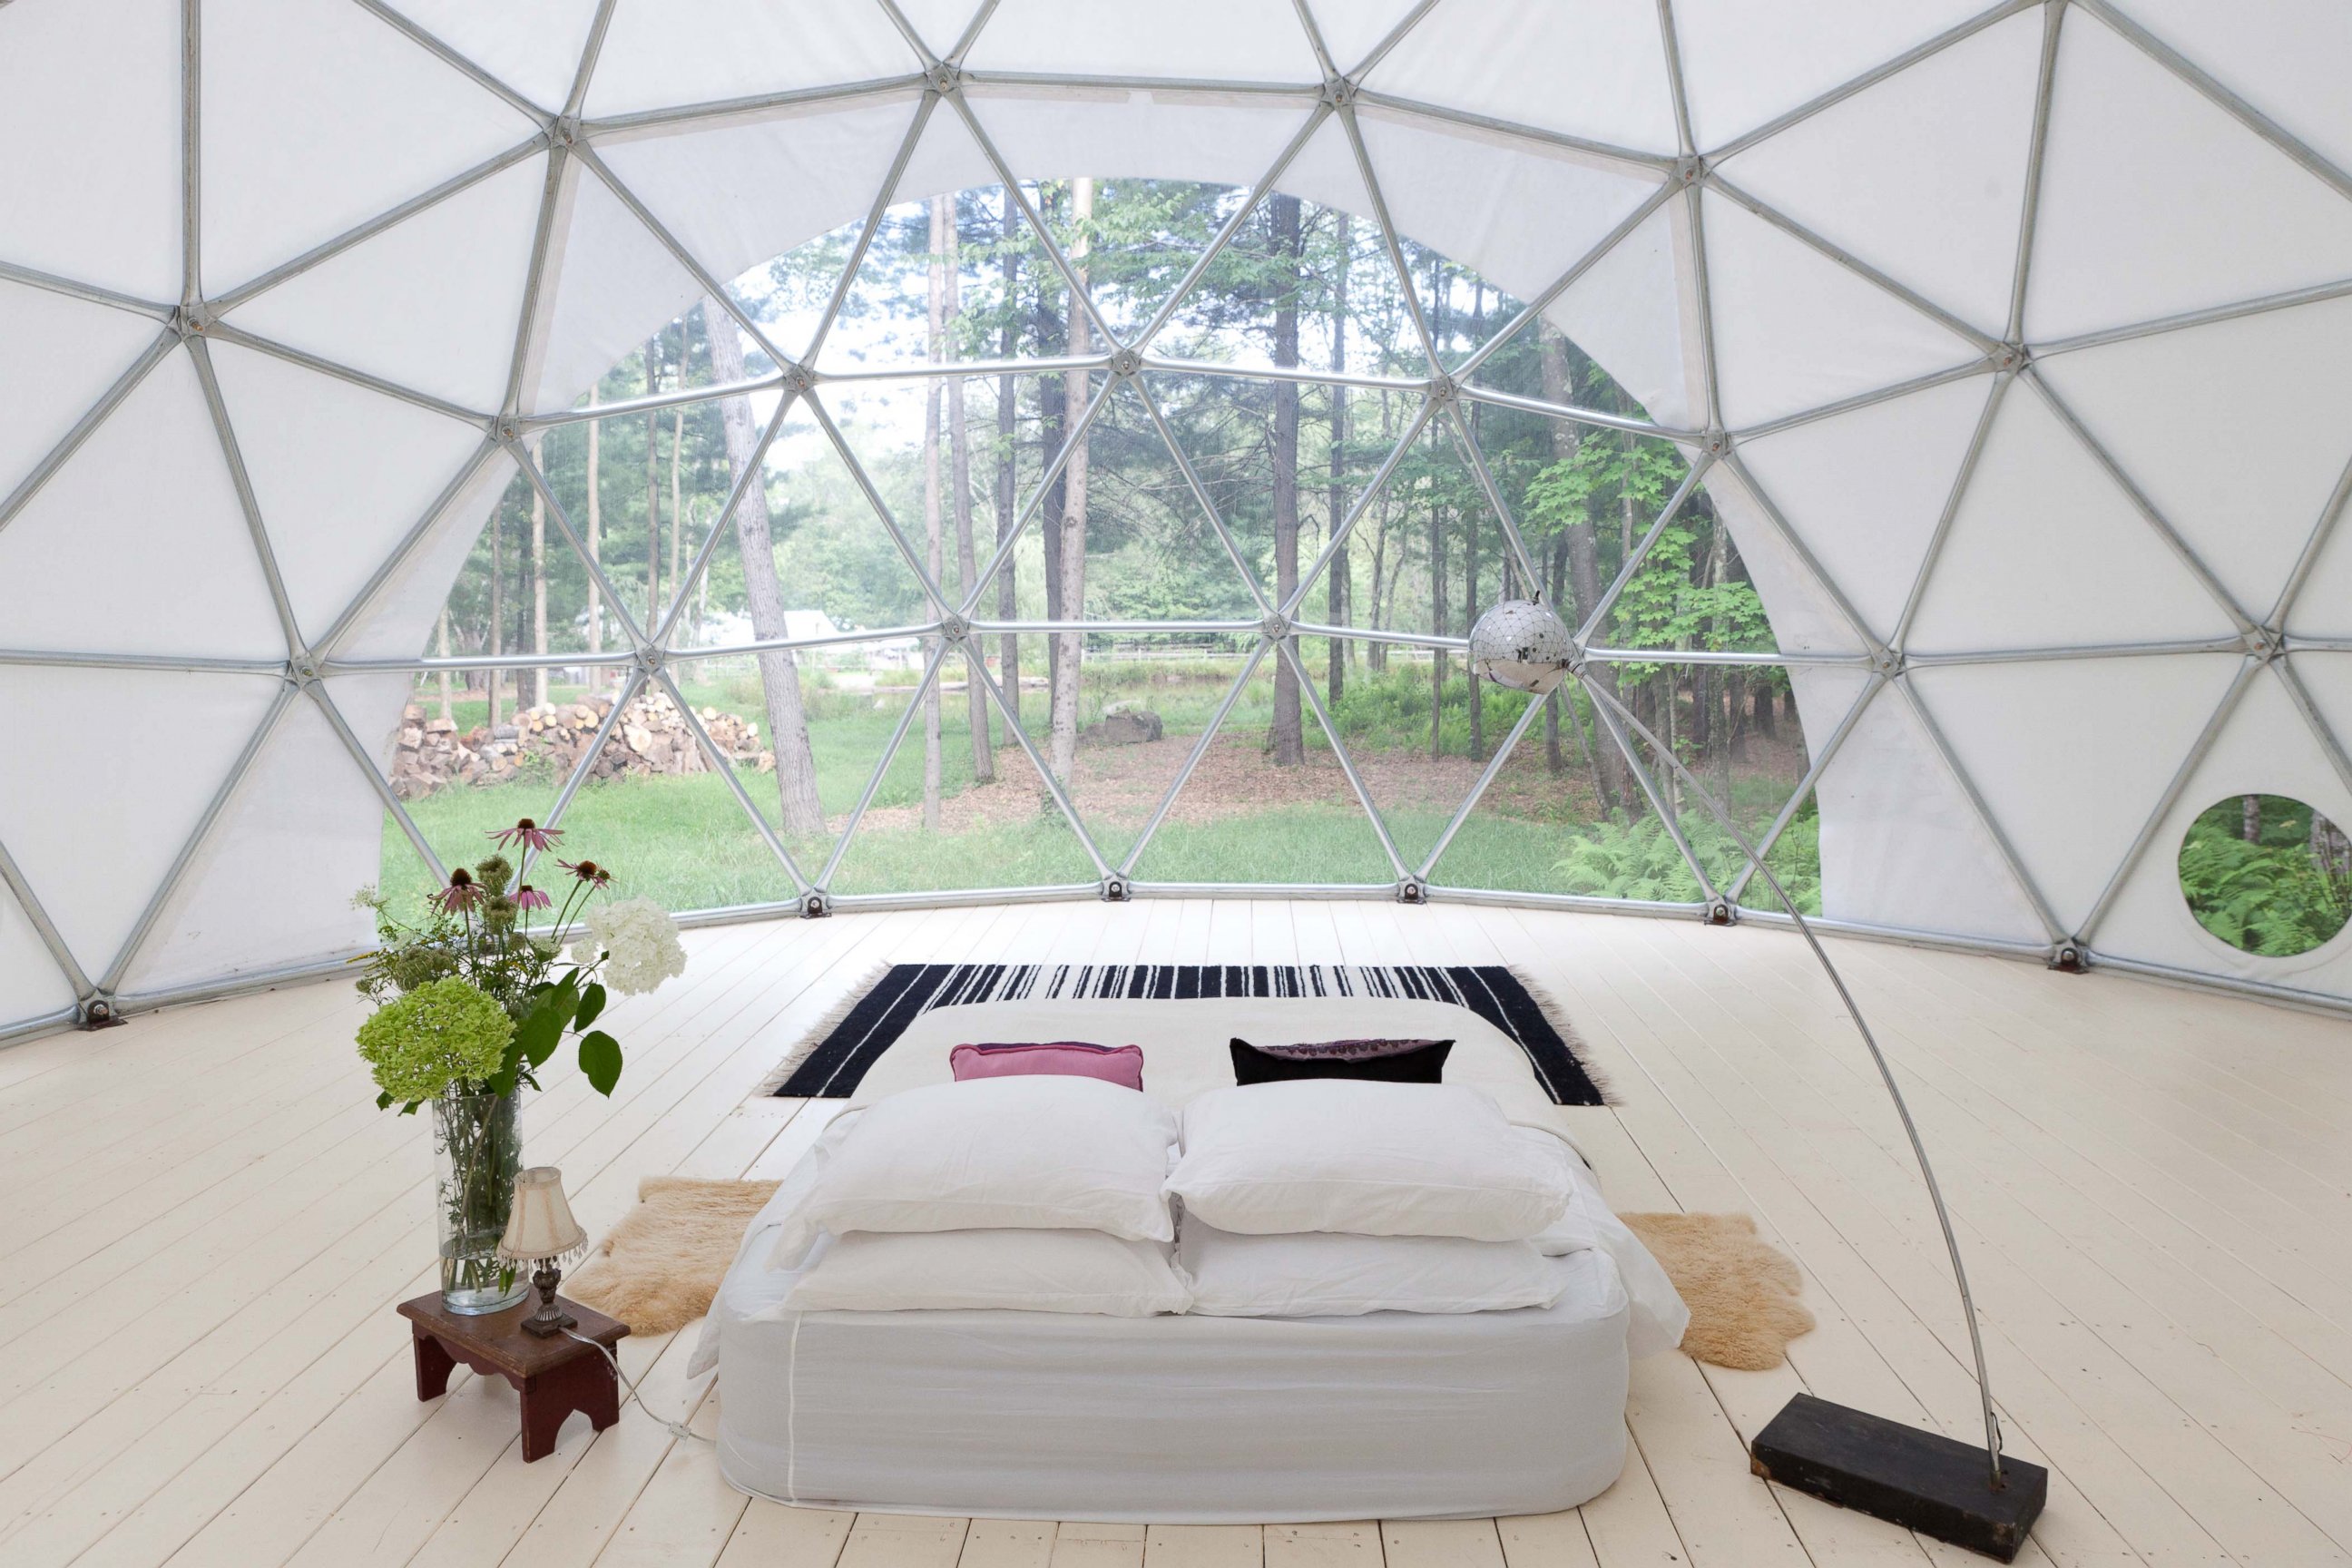 PHOTO: This see-through yurt tent is located in Woodridge, New York.